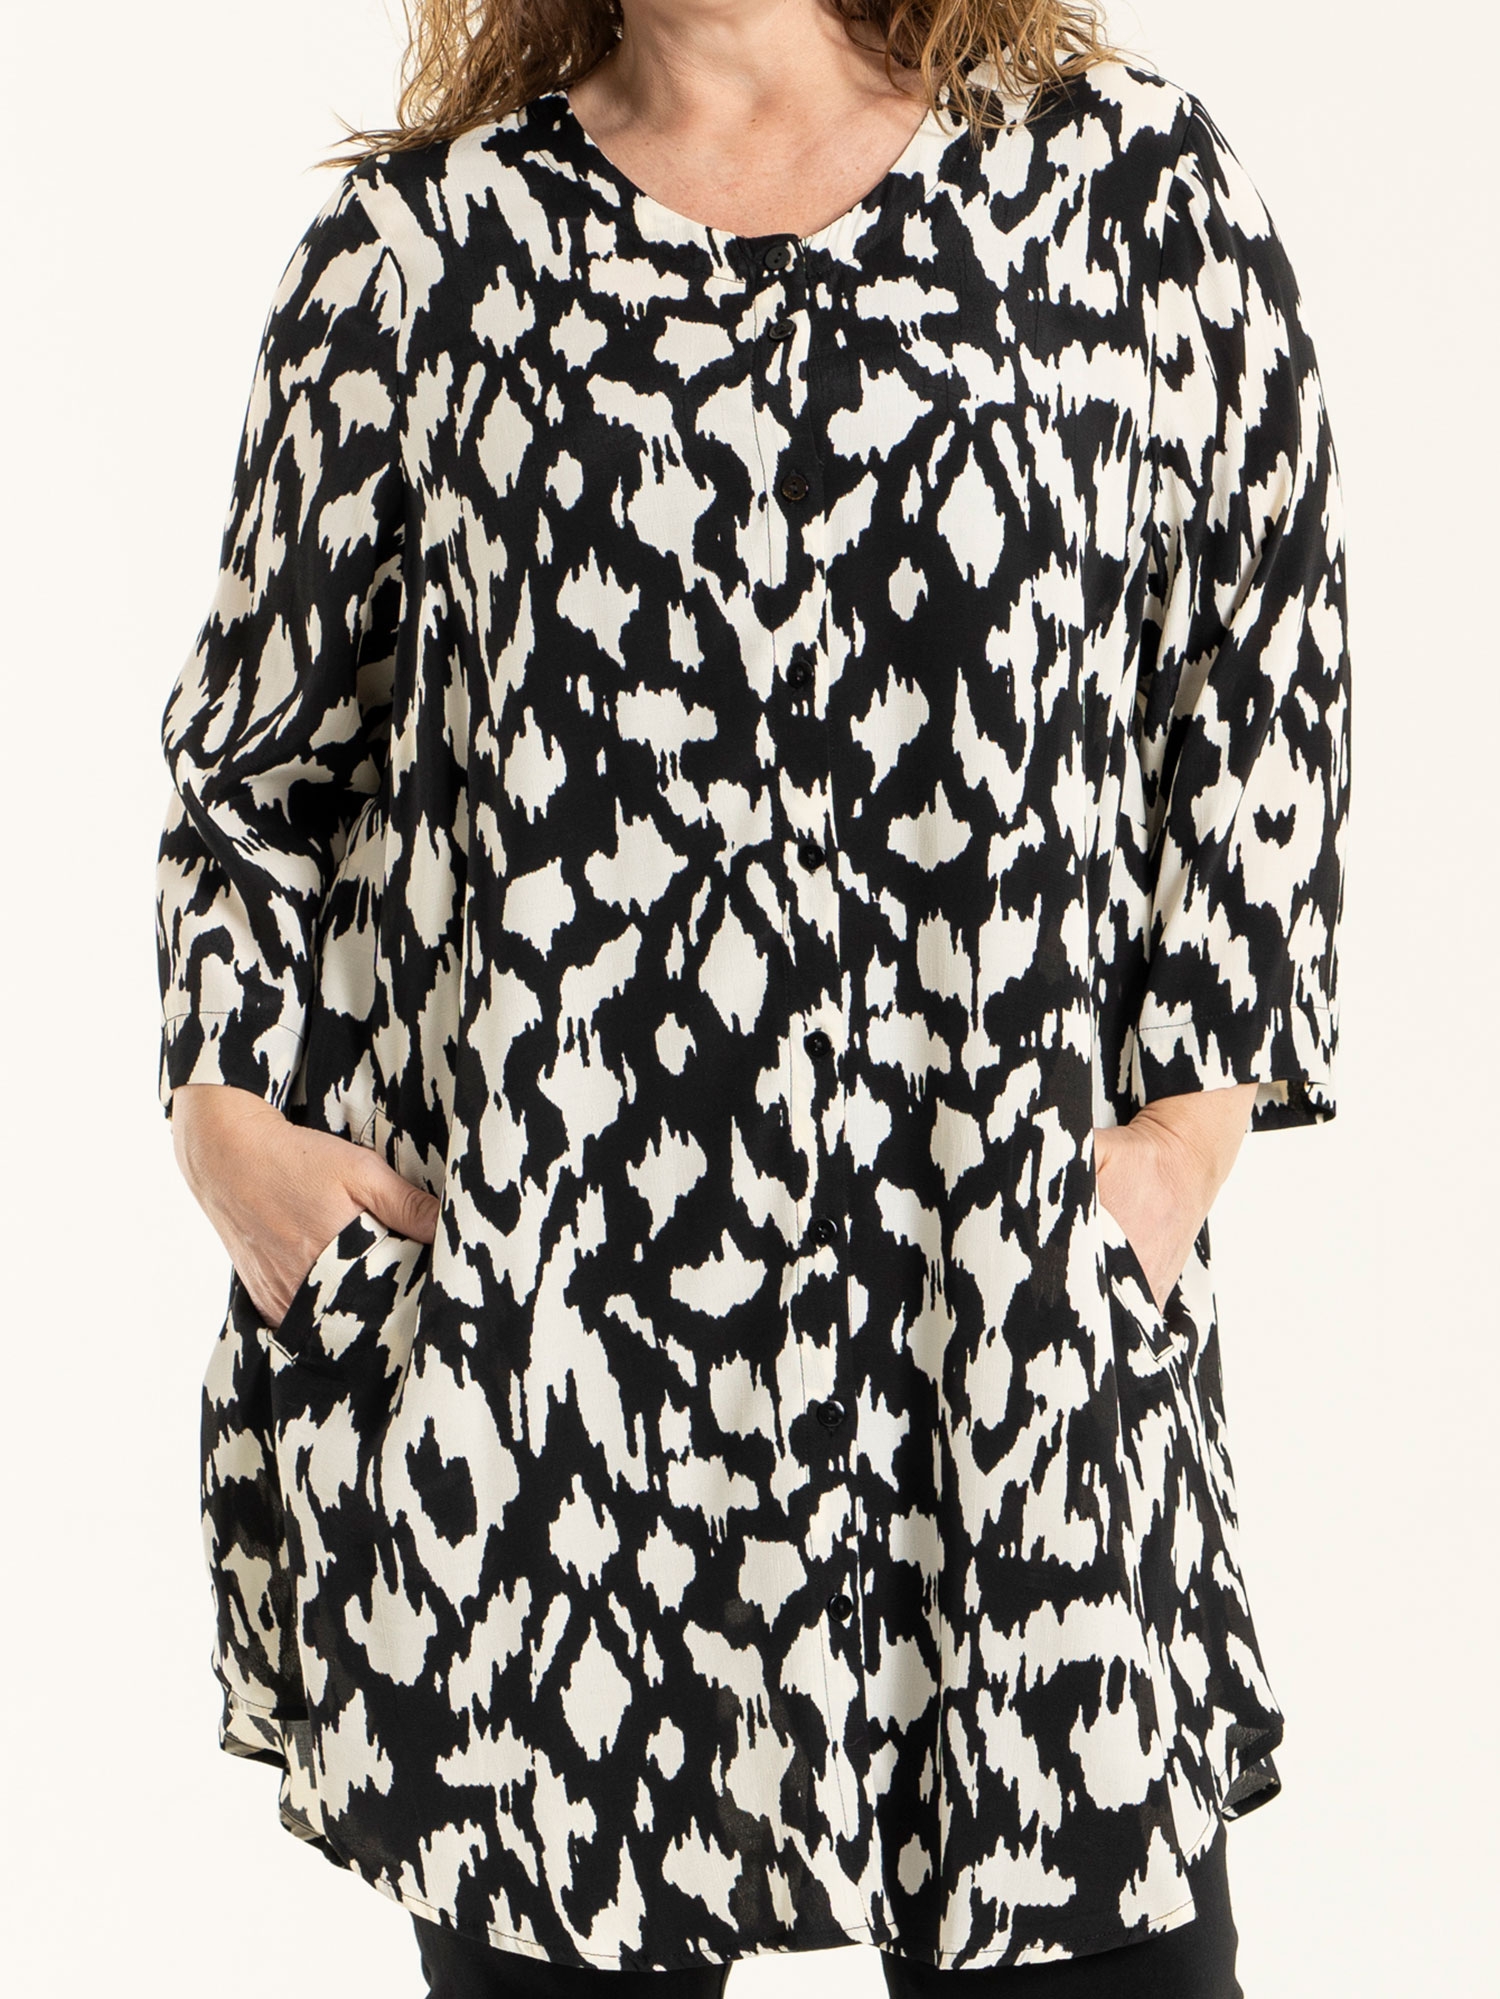 ELISABETH - Sort skjorte tunika i viskose med print fra Gozzip